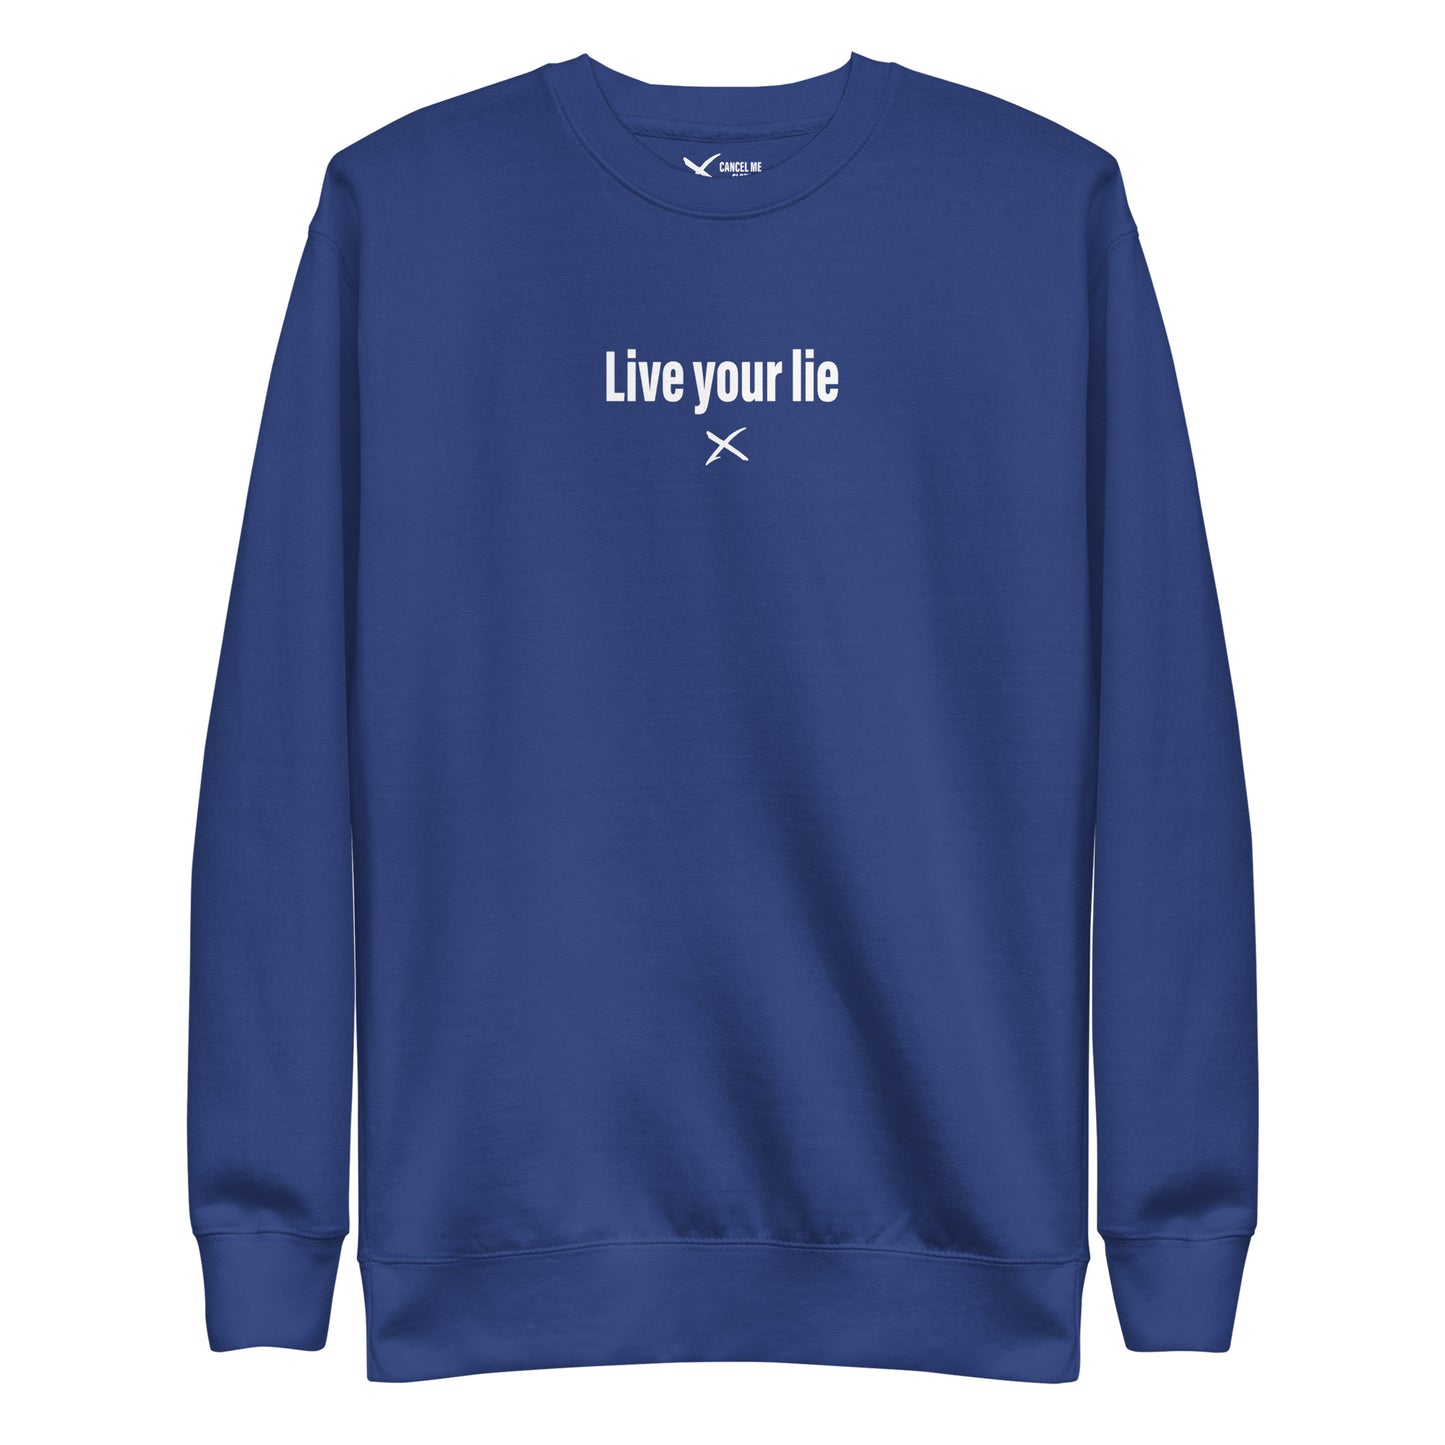 Live your lie - Sweatshirt